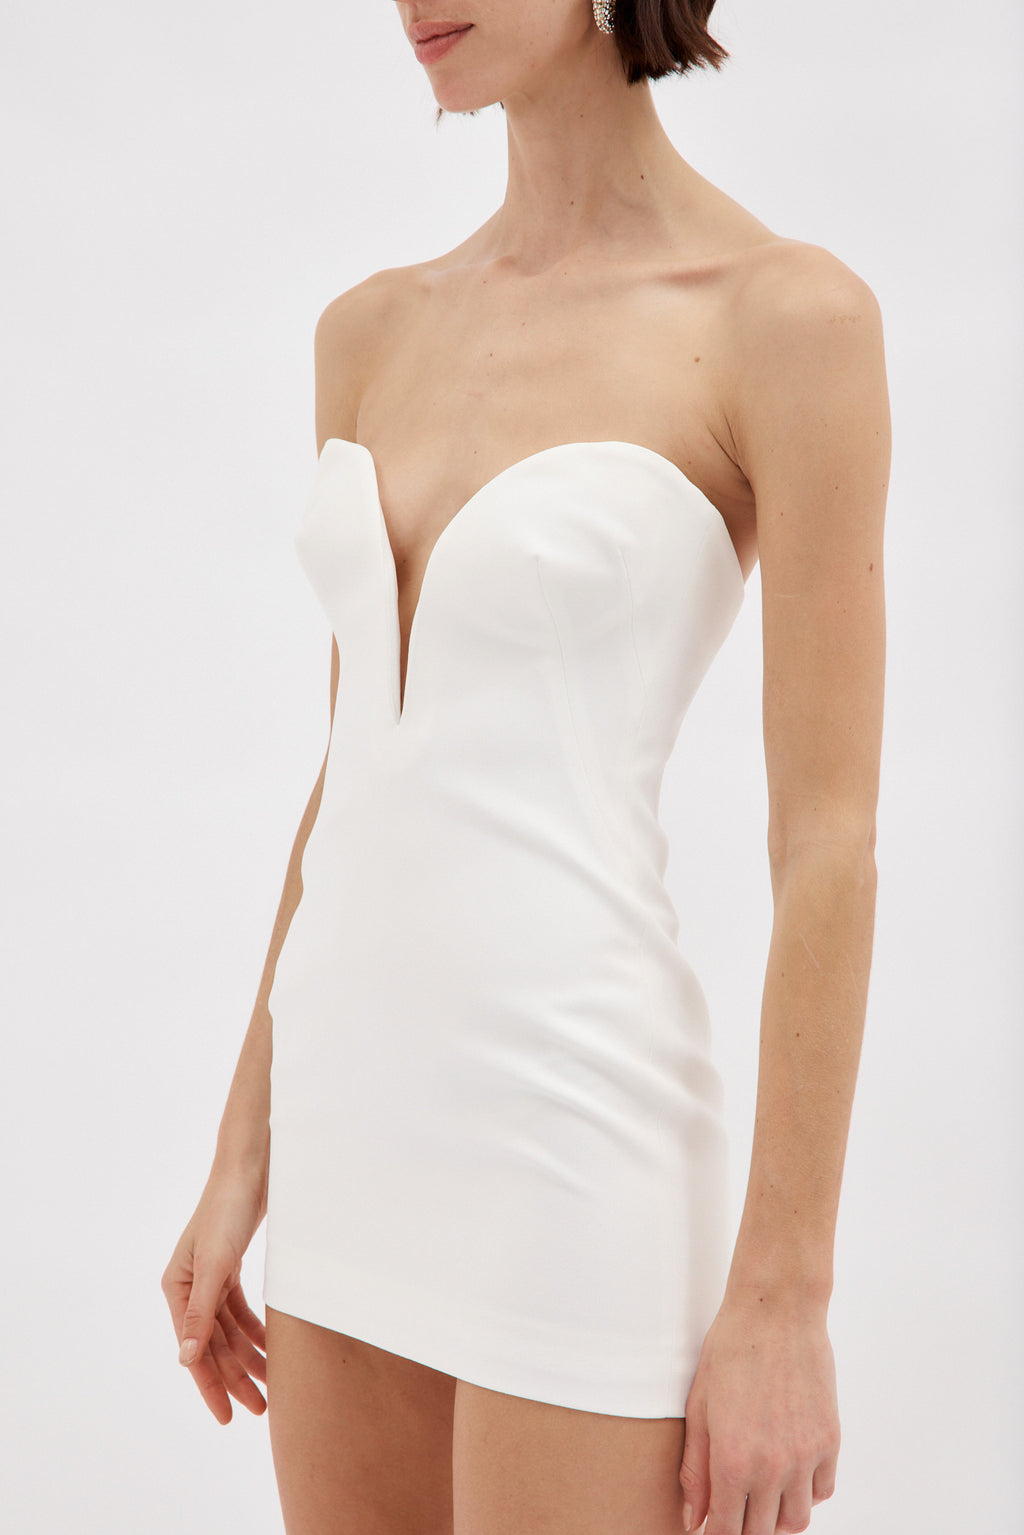 V Shape Bustier White Mini Dress